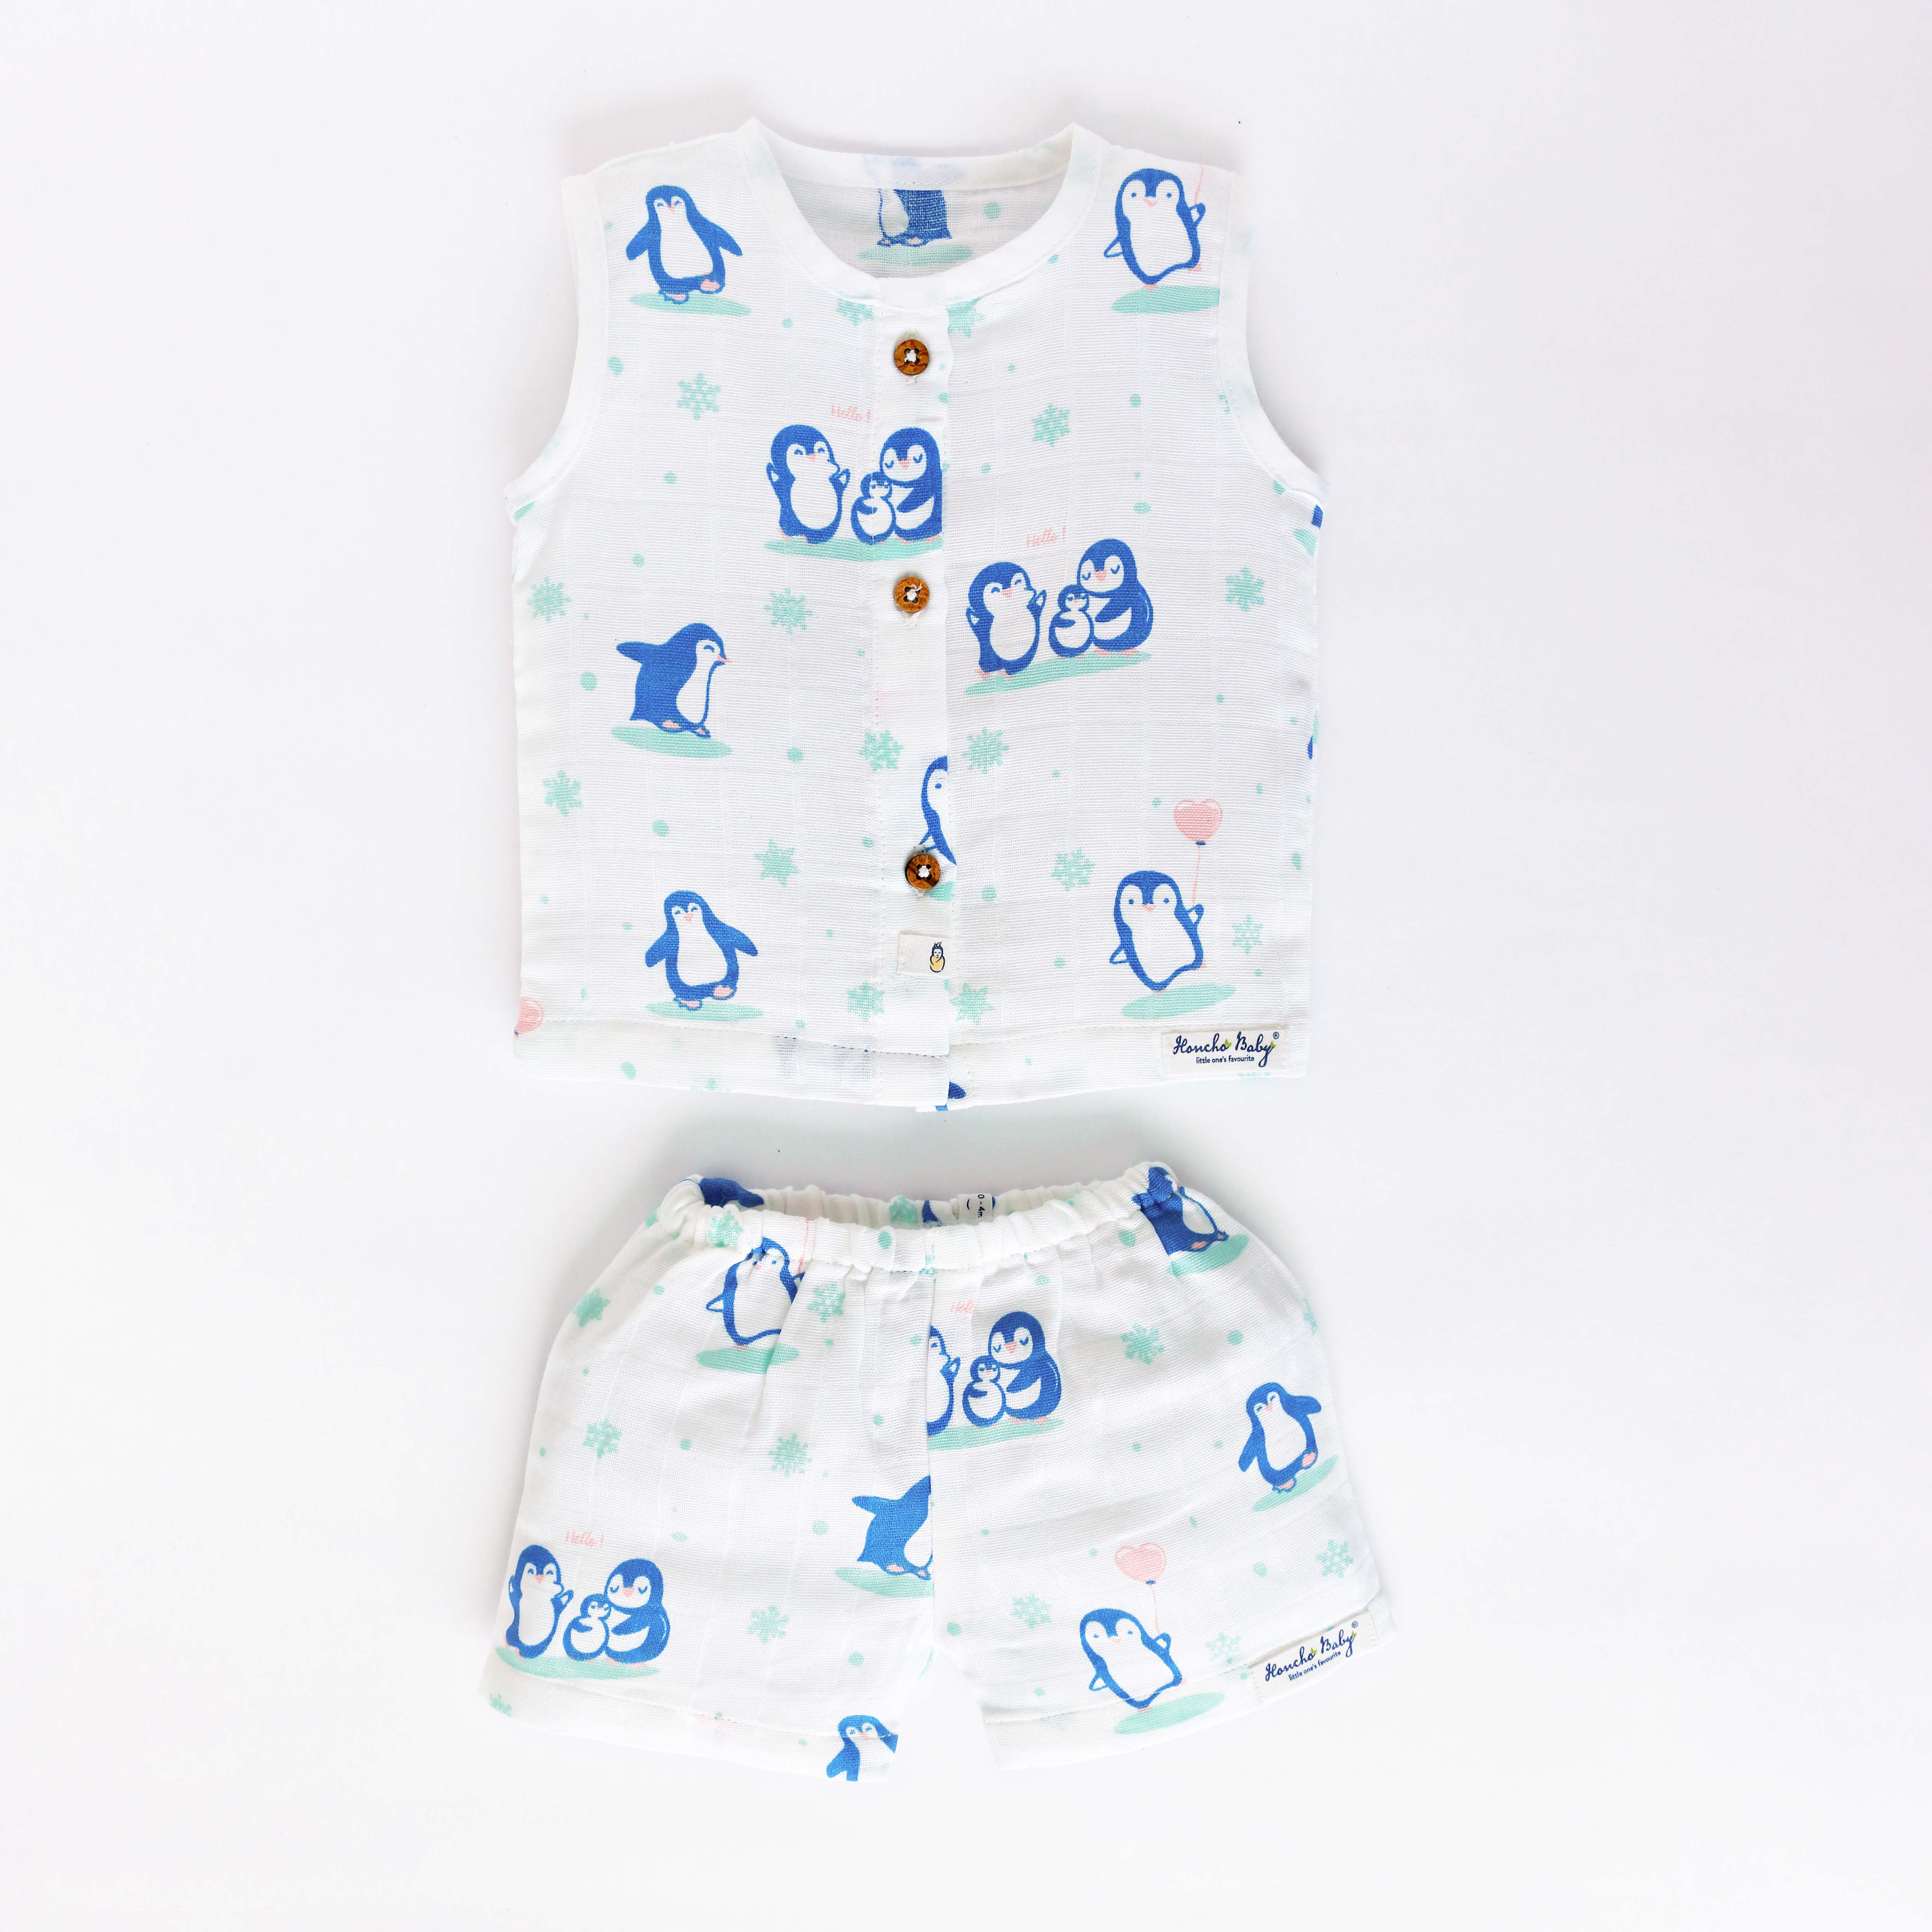 Baby Must haves Bundle Kit (11 piece set) - Happy Waddling Penguins